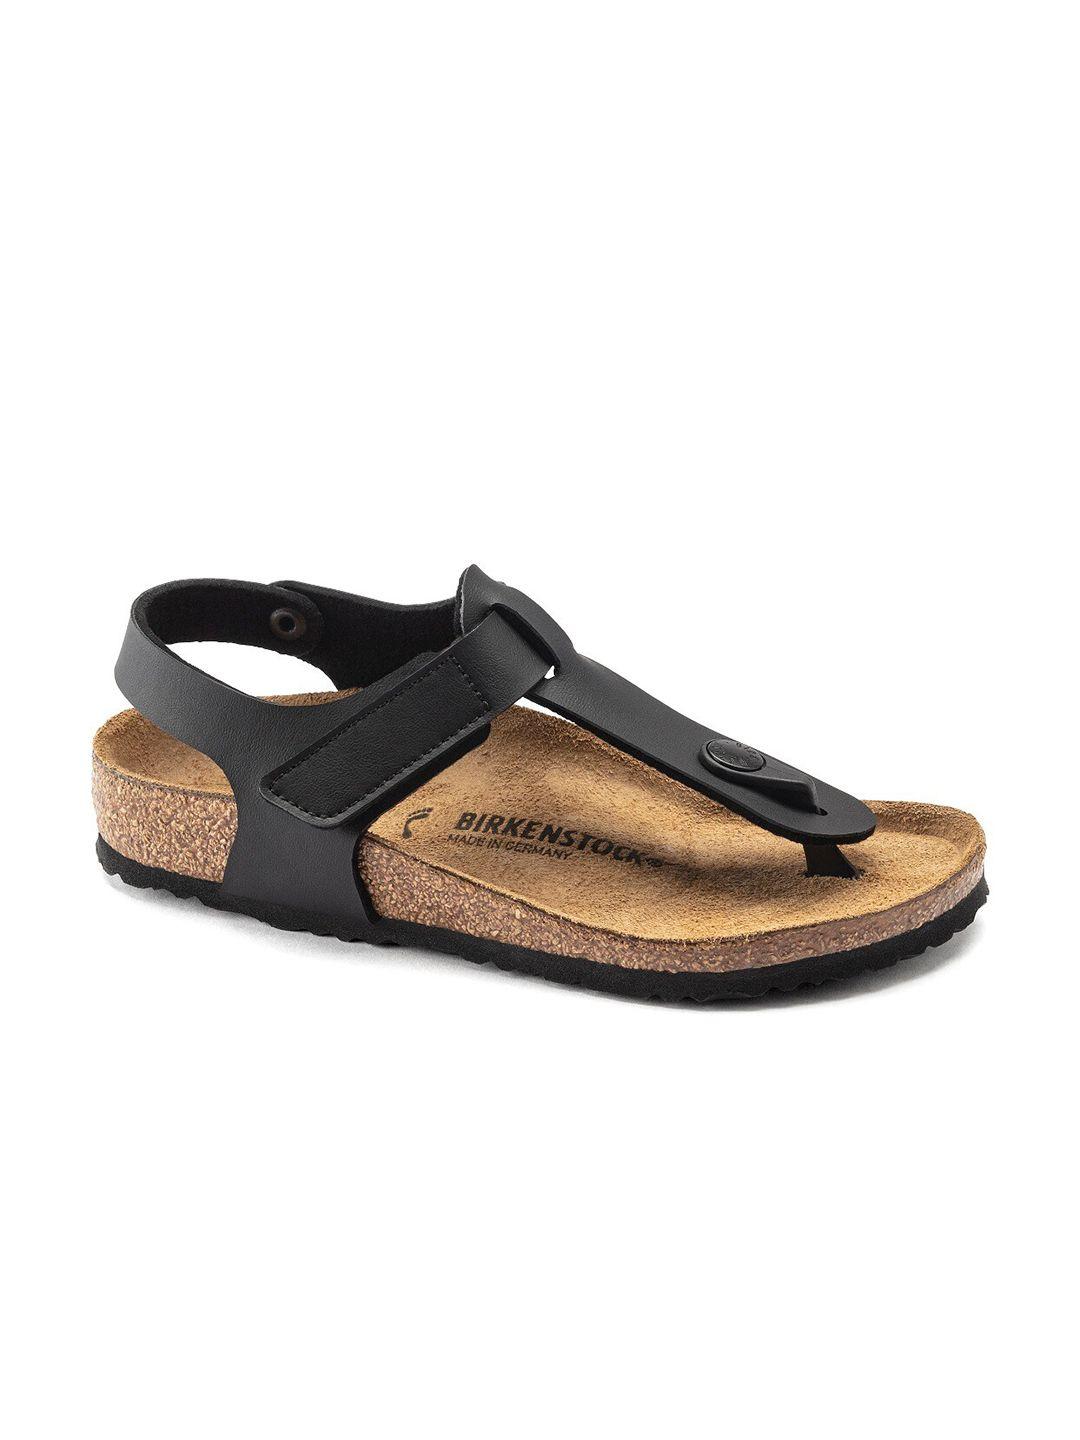 birkenstock boys kairo hl kids birko-flor black narrow width sandals